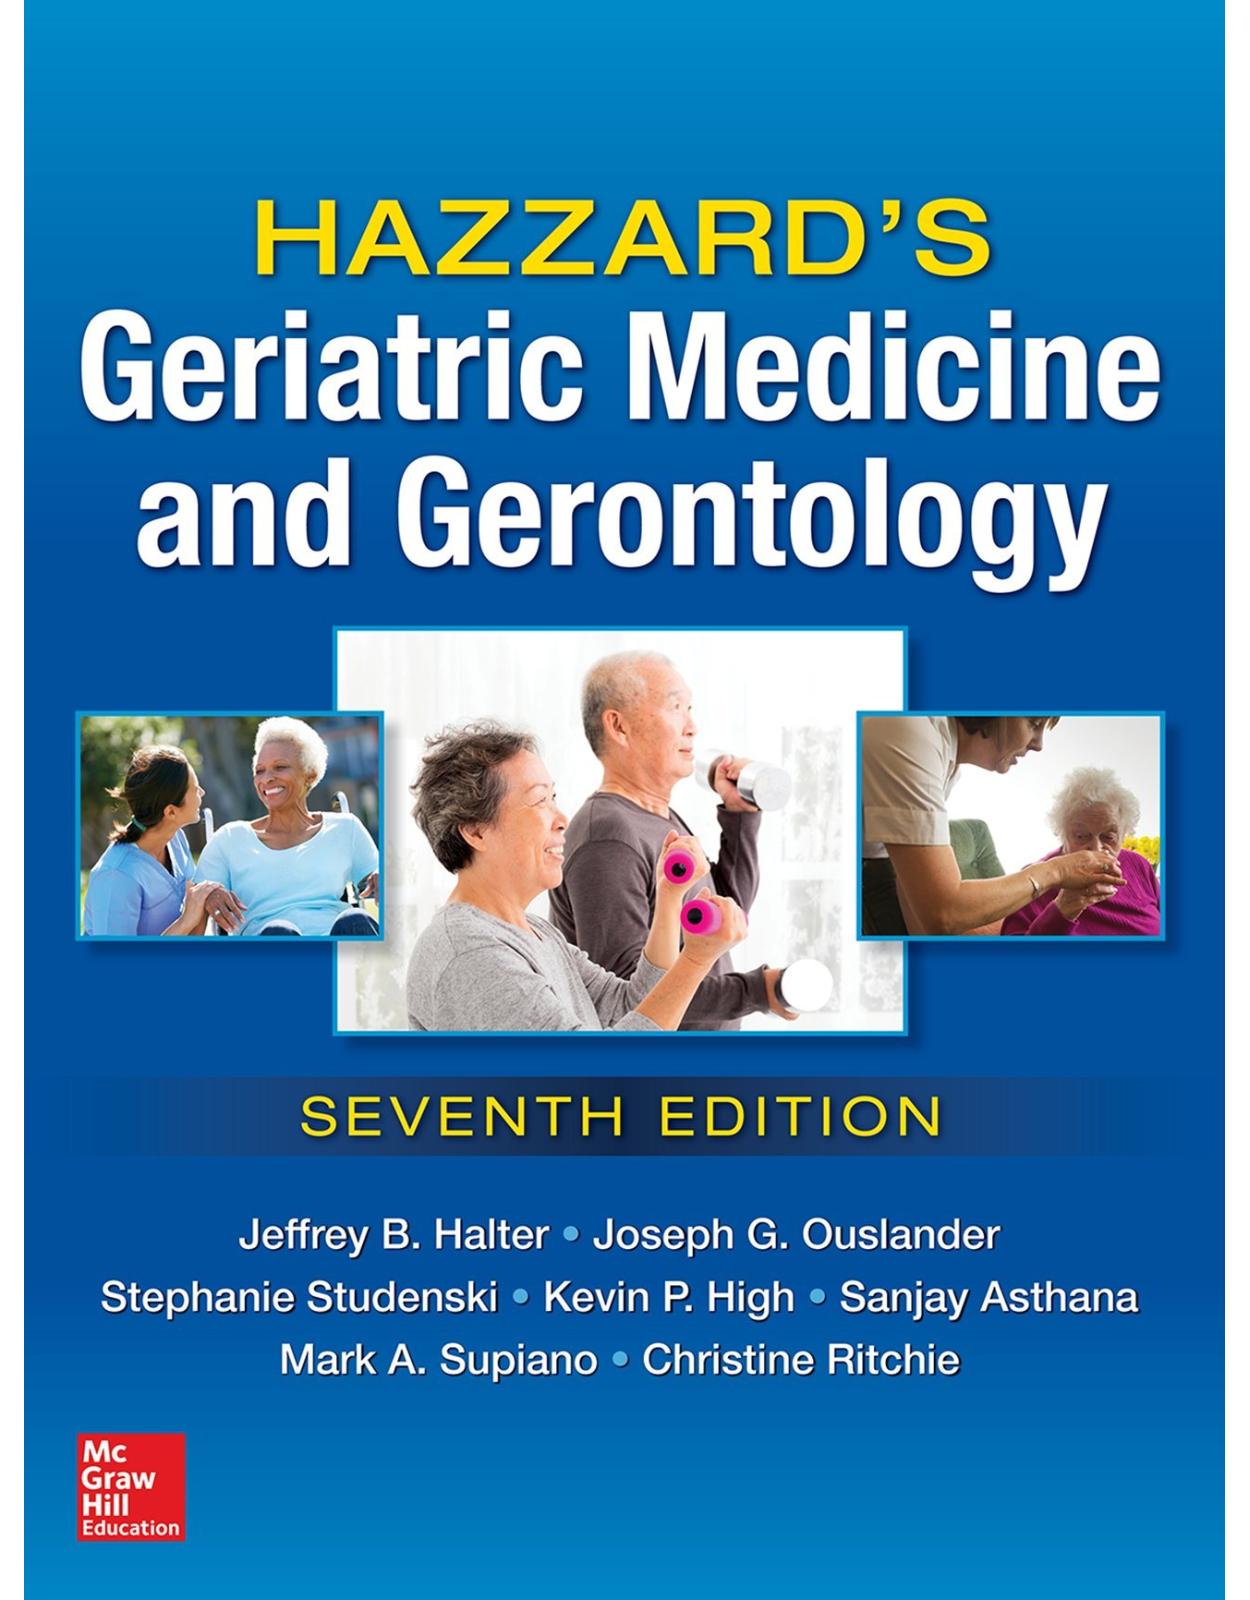 Hazzard's Geriatric Medicine and Gerontology. 7th edition